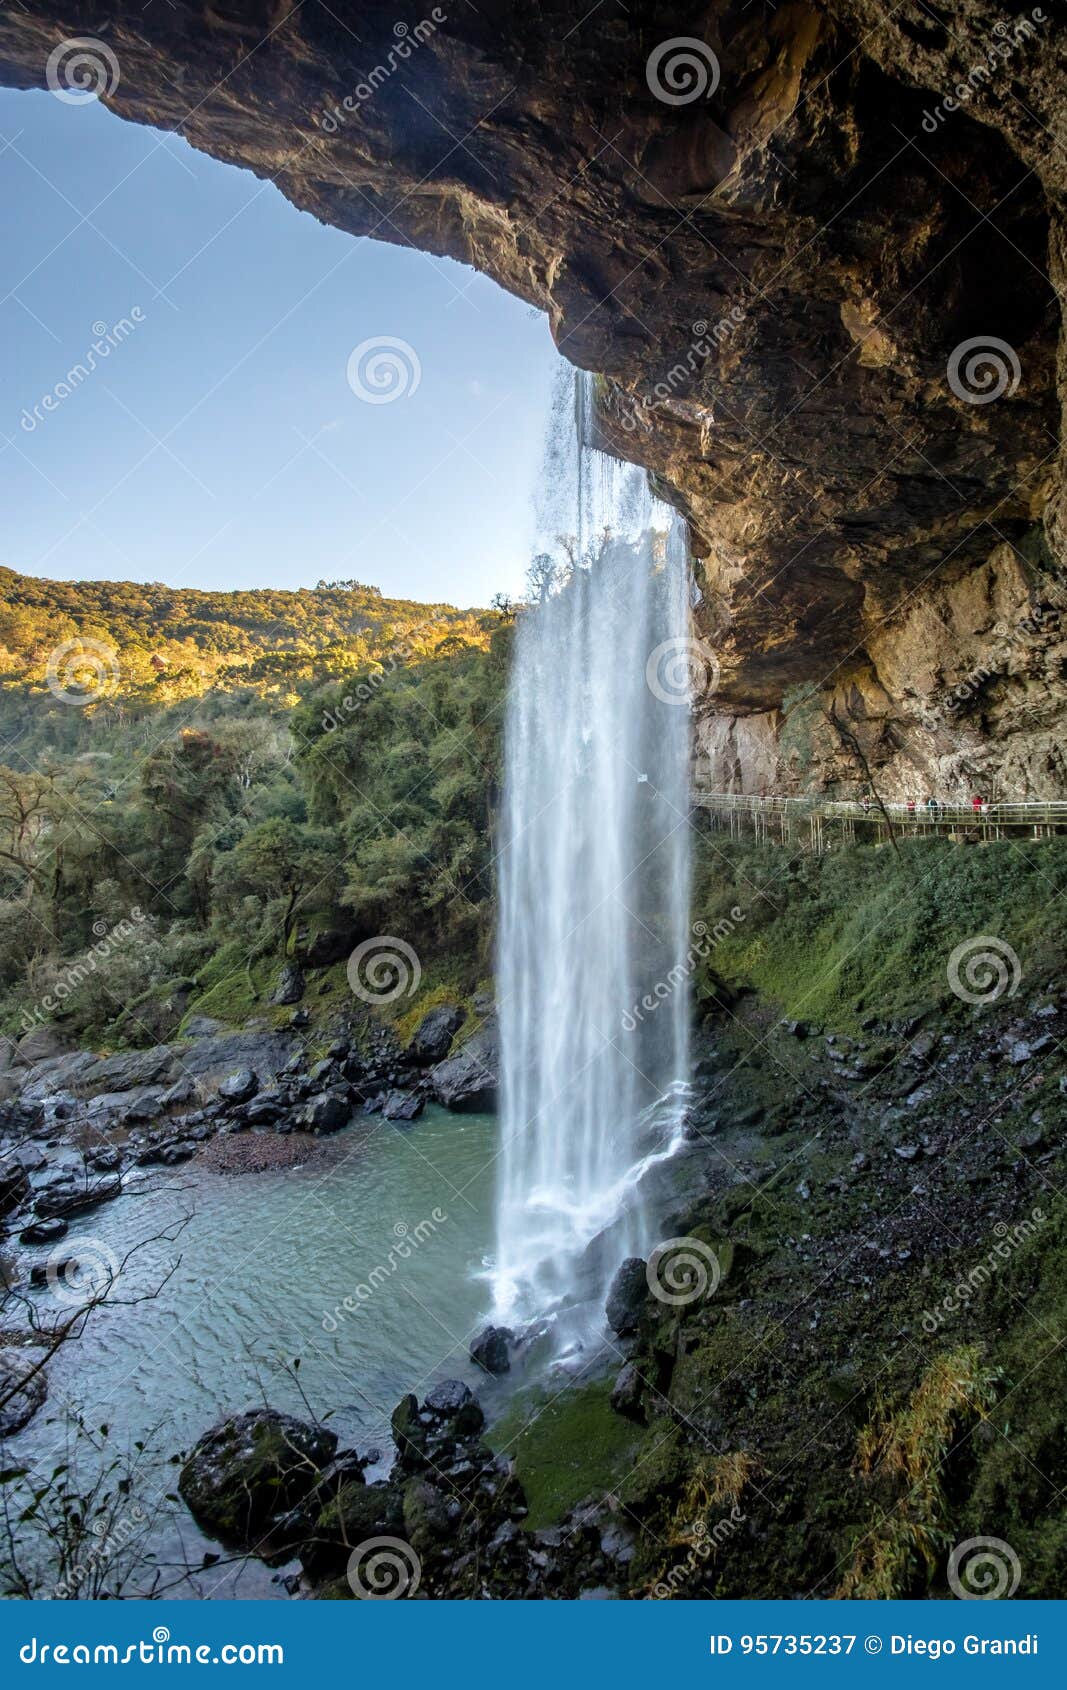 salto ventoso waterfall - farroupilha, rio grande do sul, brazil